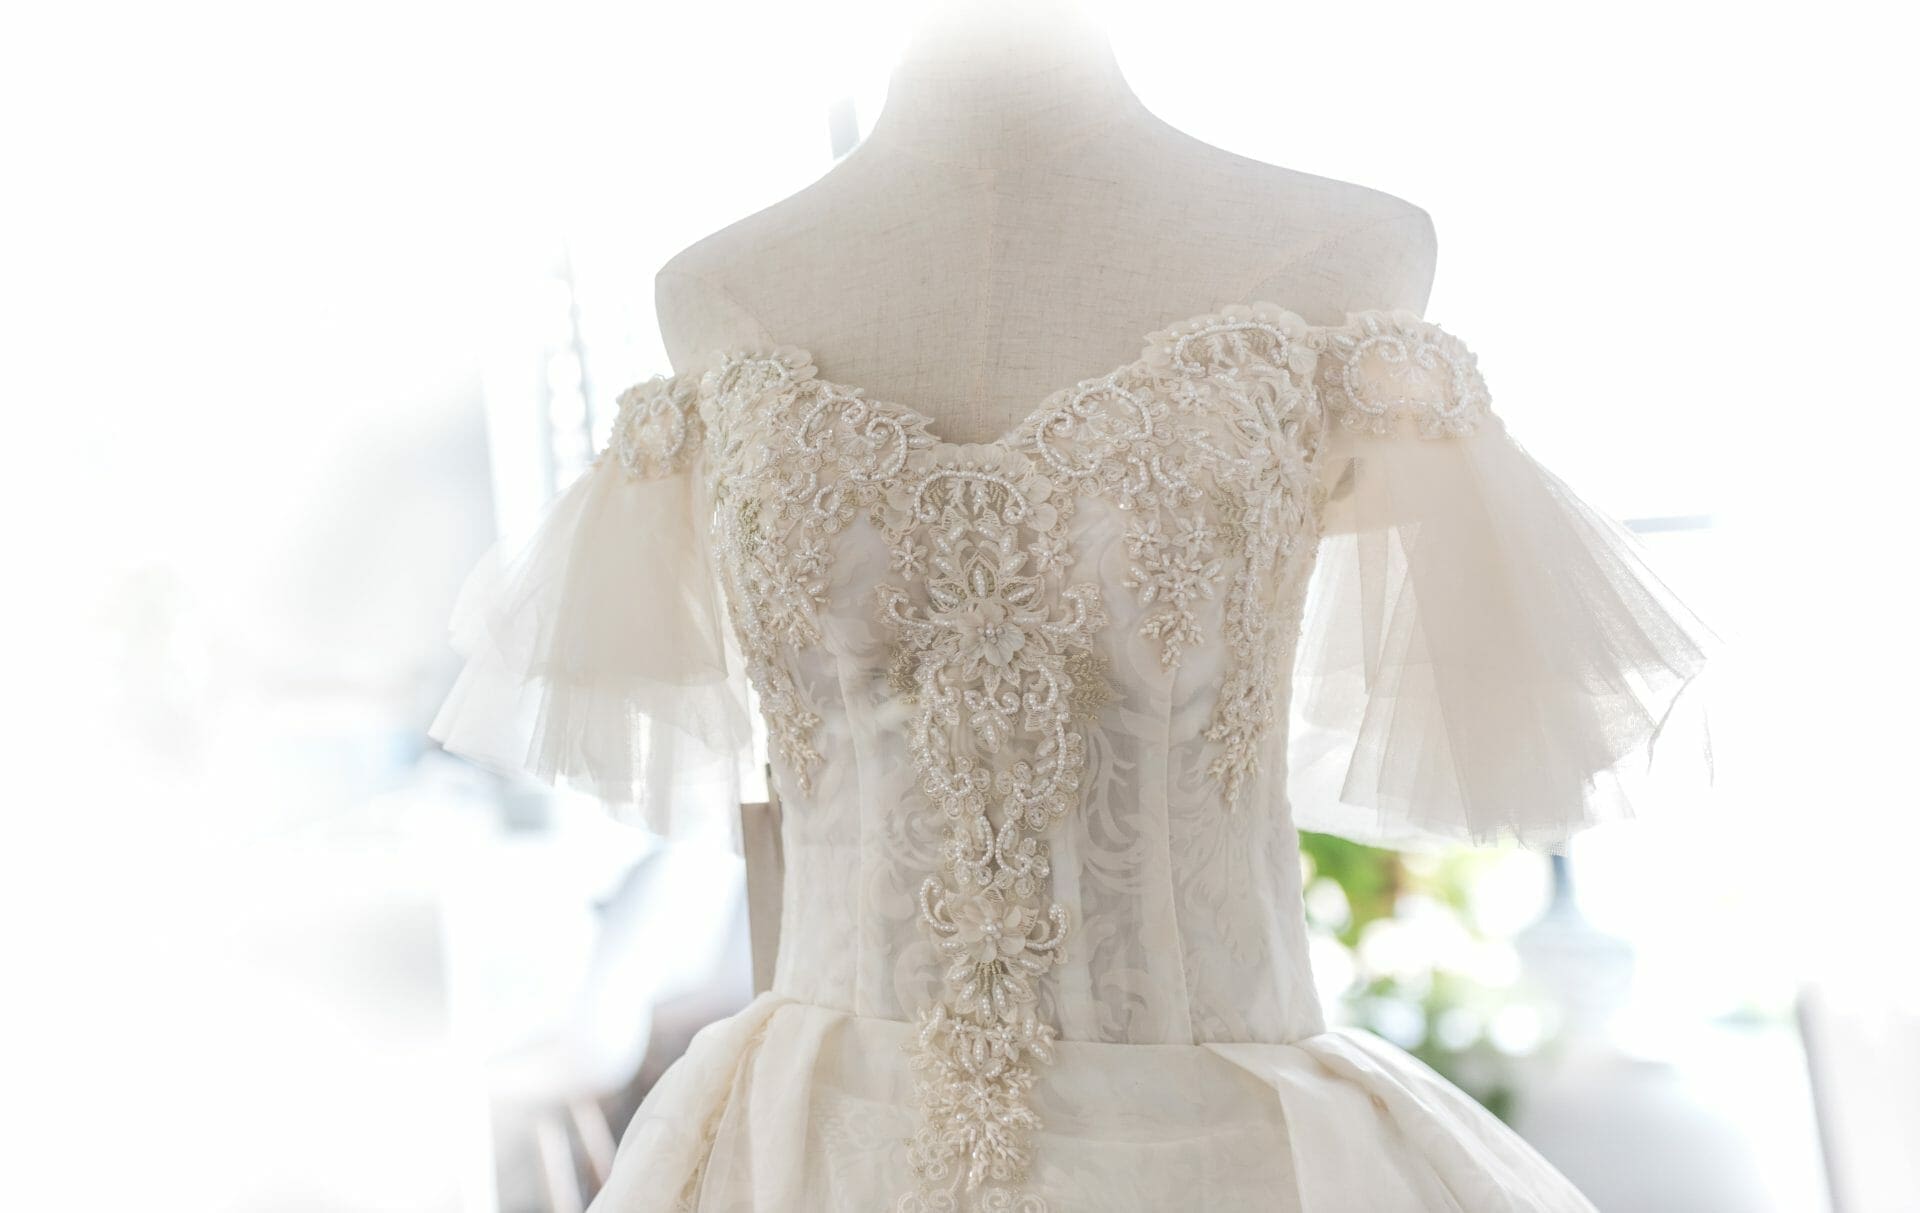 An off the shoulder wedding dress on a mannequin.